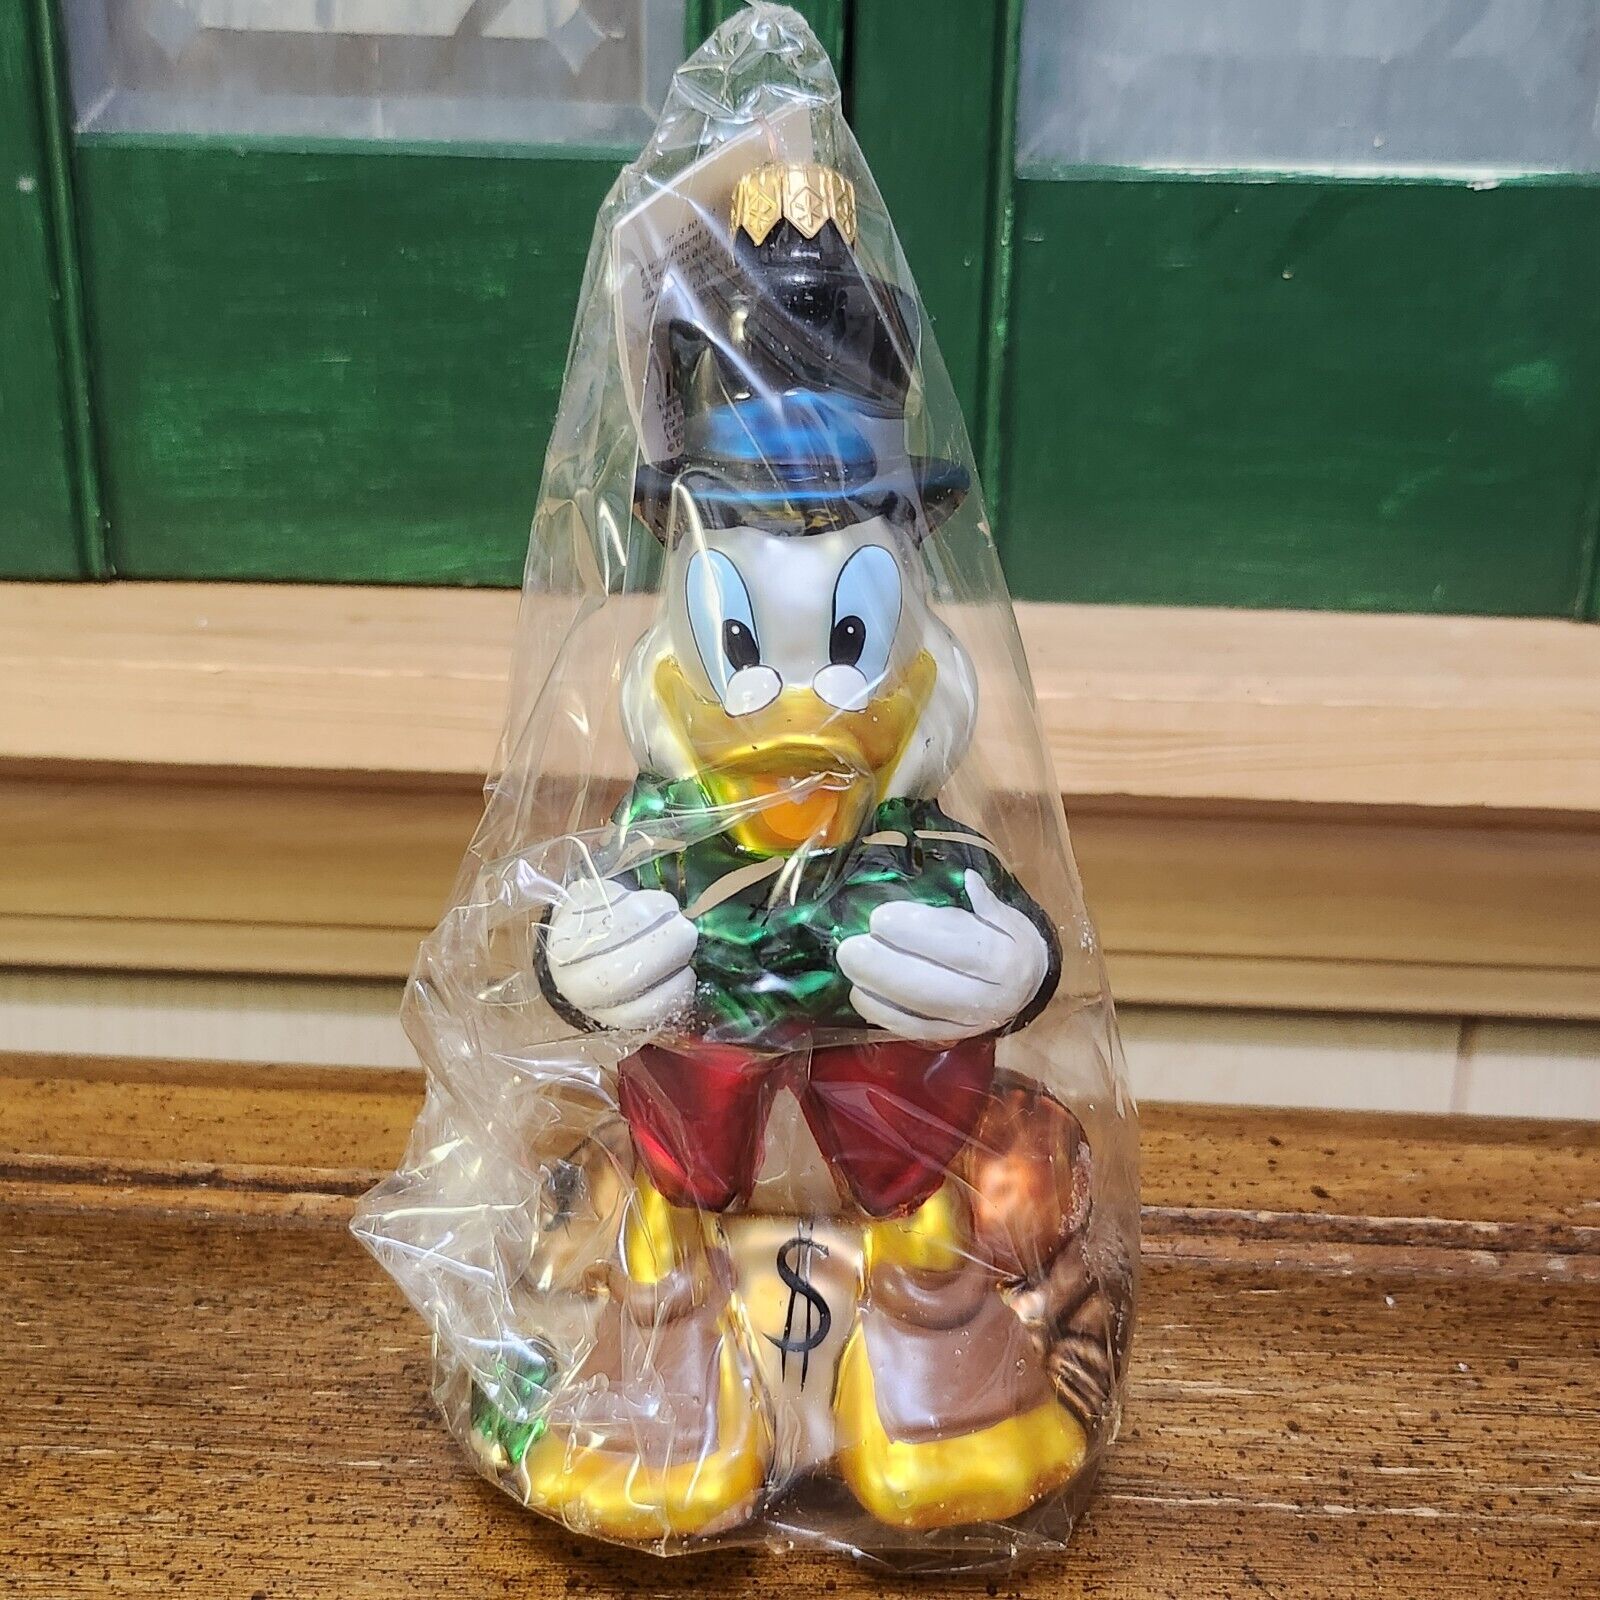 New Christopher Radko 1997 Disney Scrooge McDuck Glass Ornament #1641 of 2500